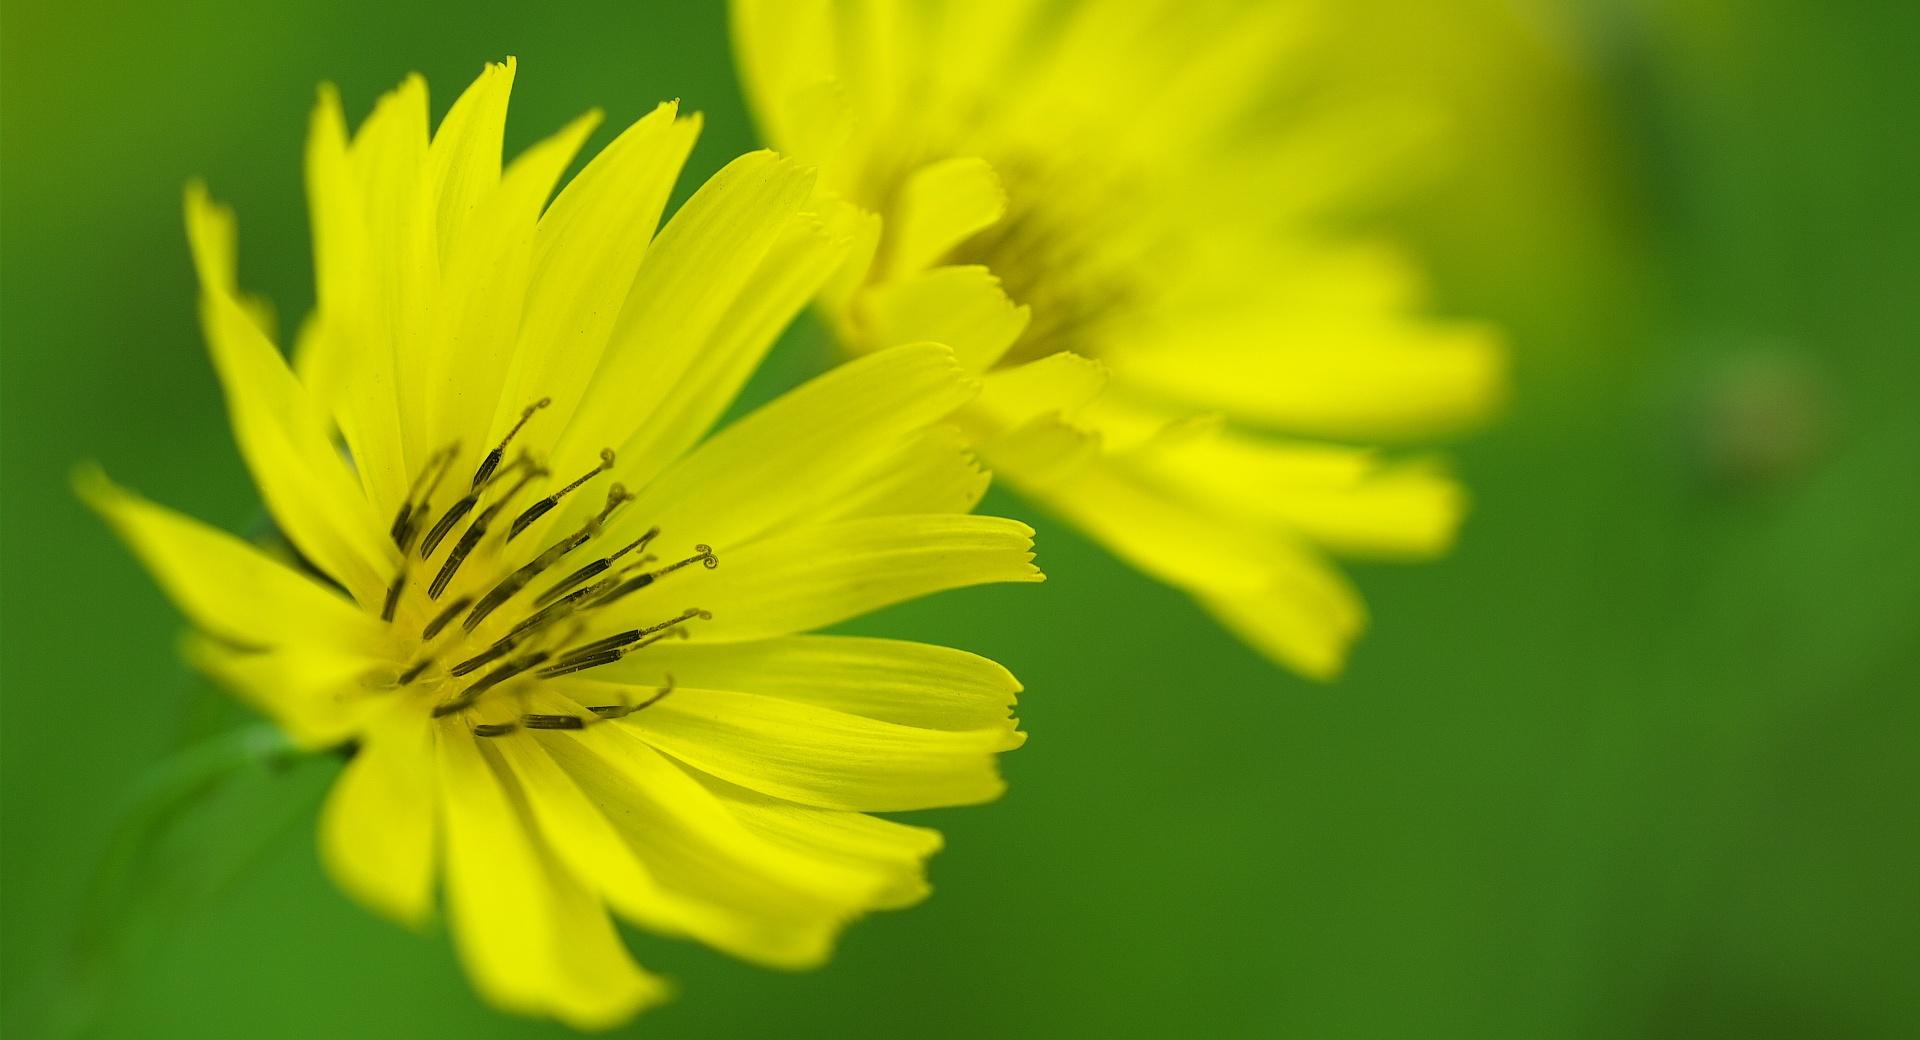 Yellow Ixeris Debilis Flowers Macro at 640 x 960 iPhone 4 size wallpapers HD quality